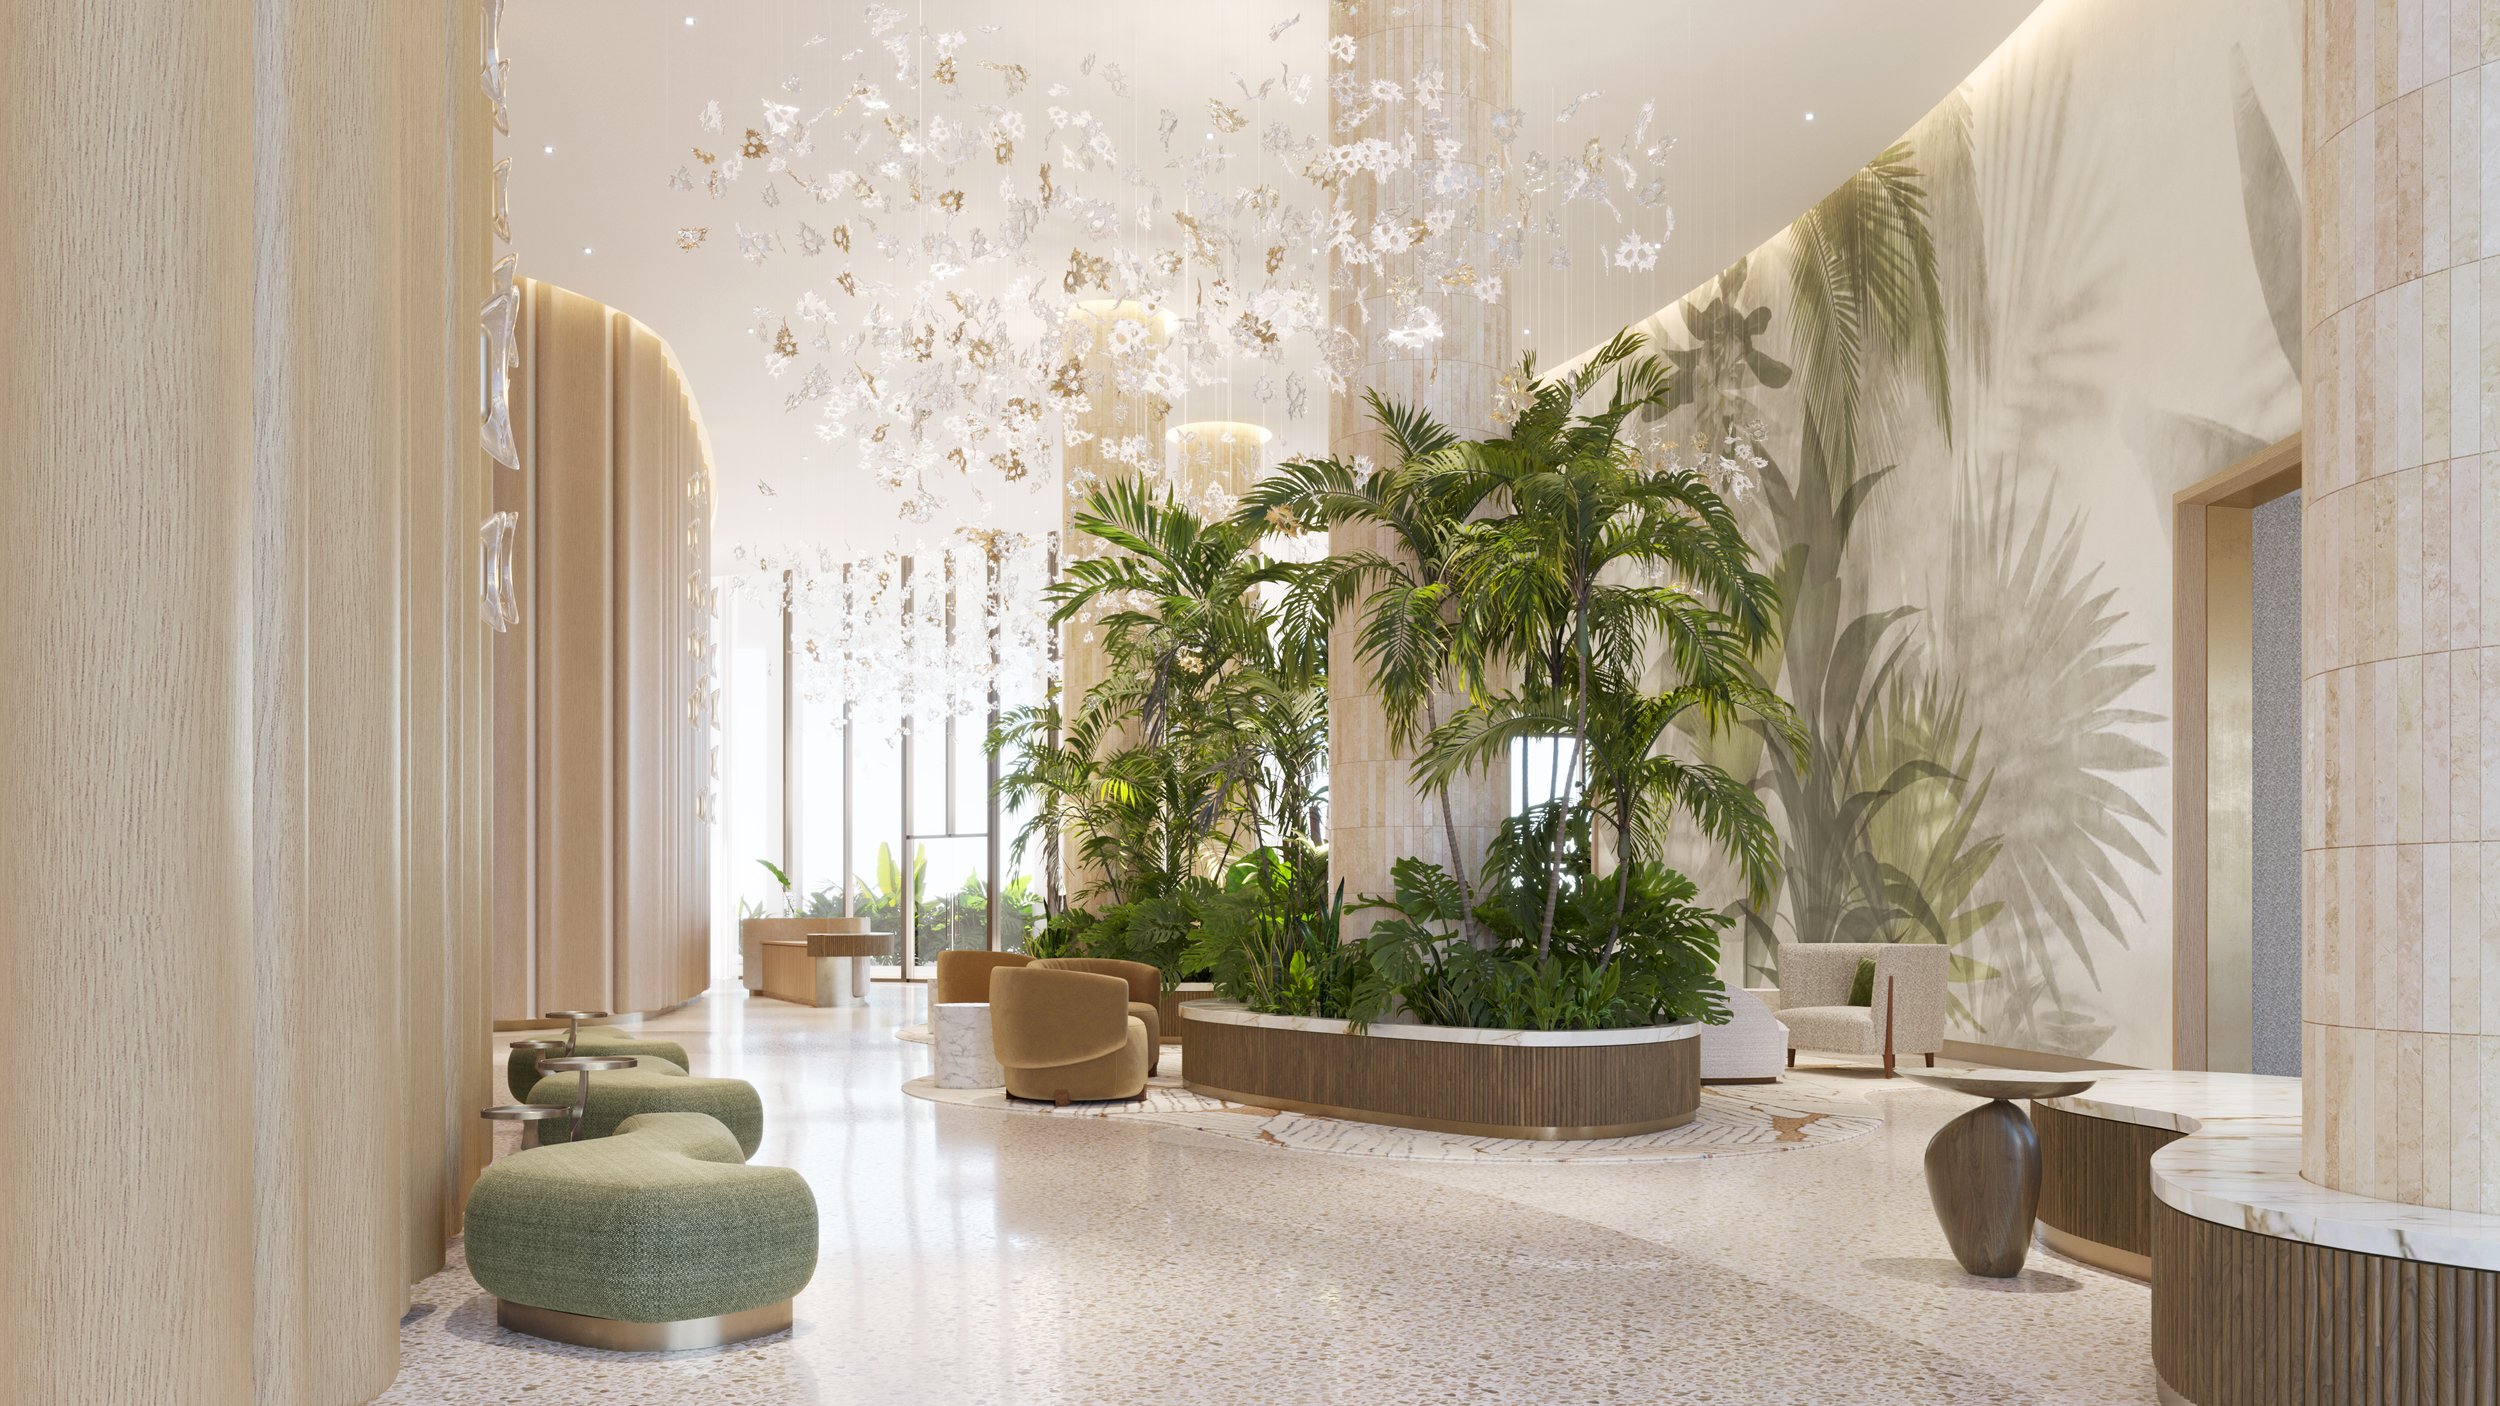 Fashion Island-area hotel to add Ritz-Carlton residences with 22